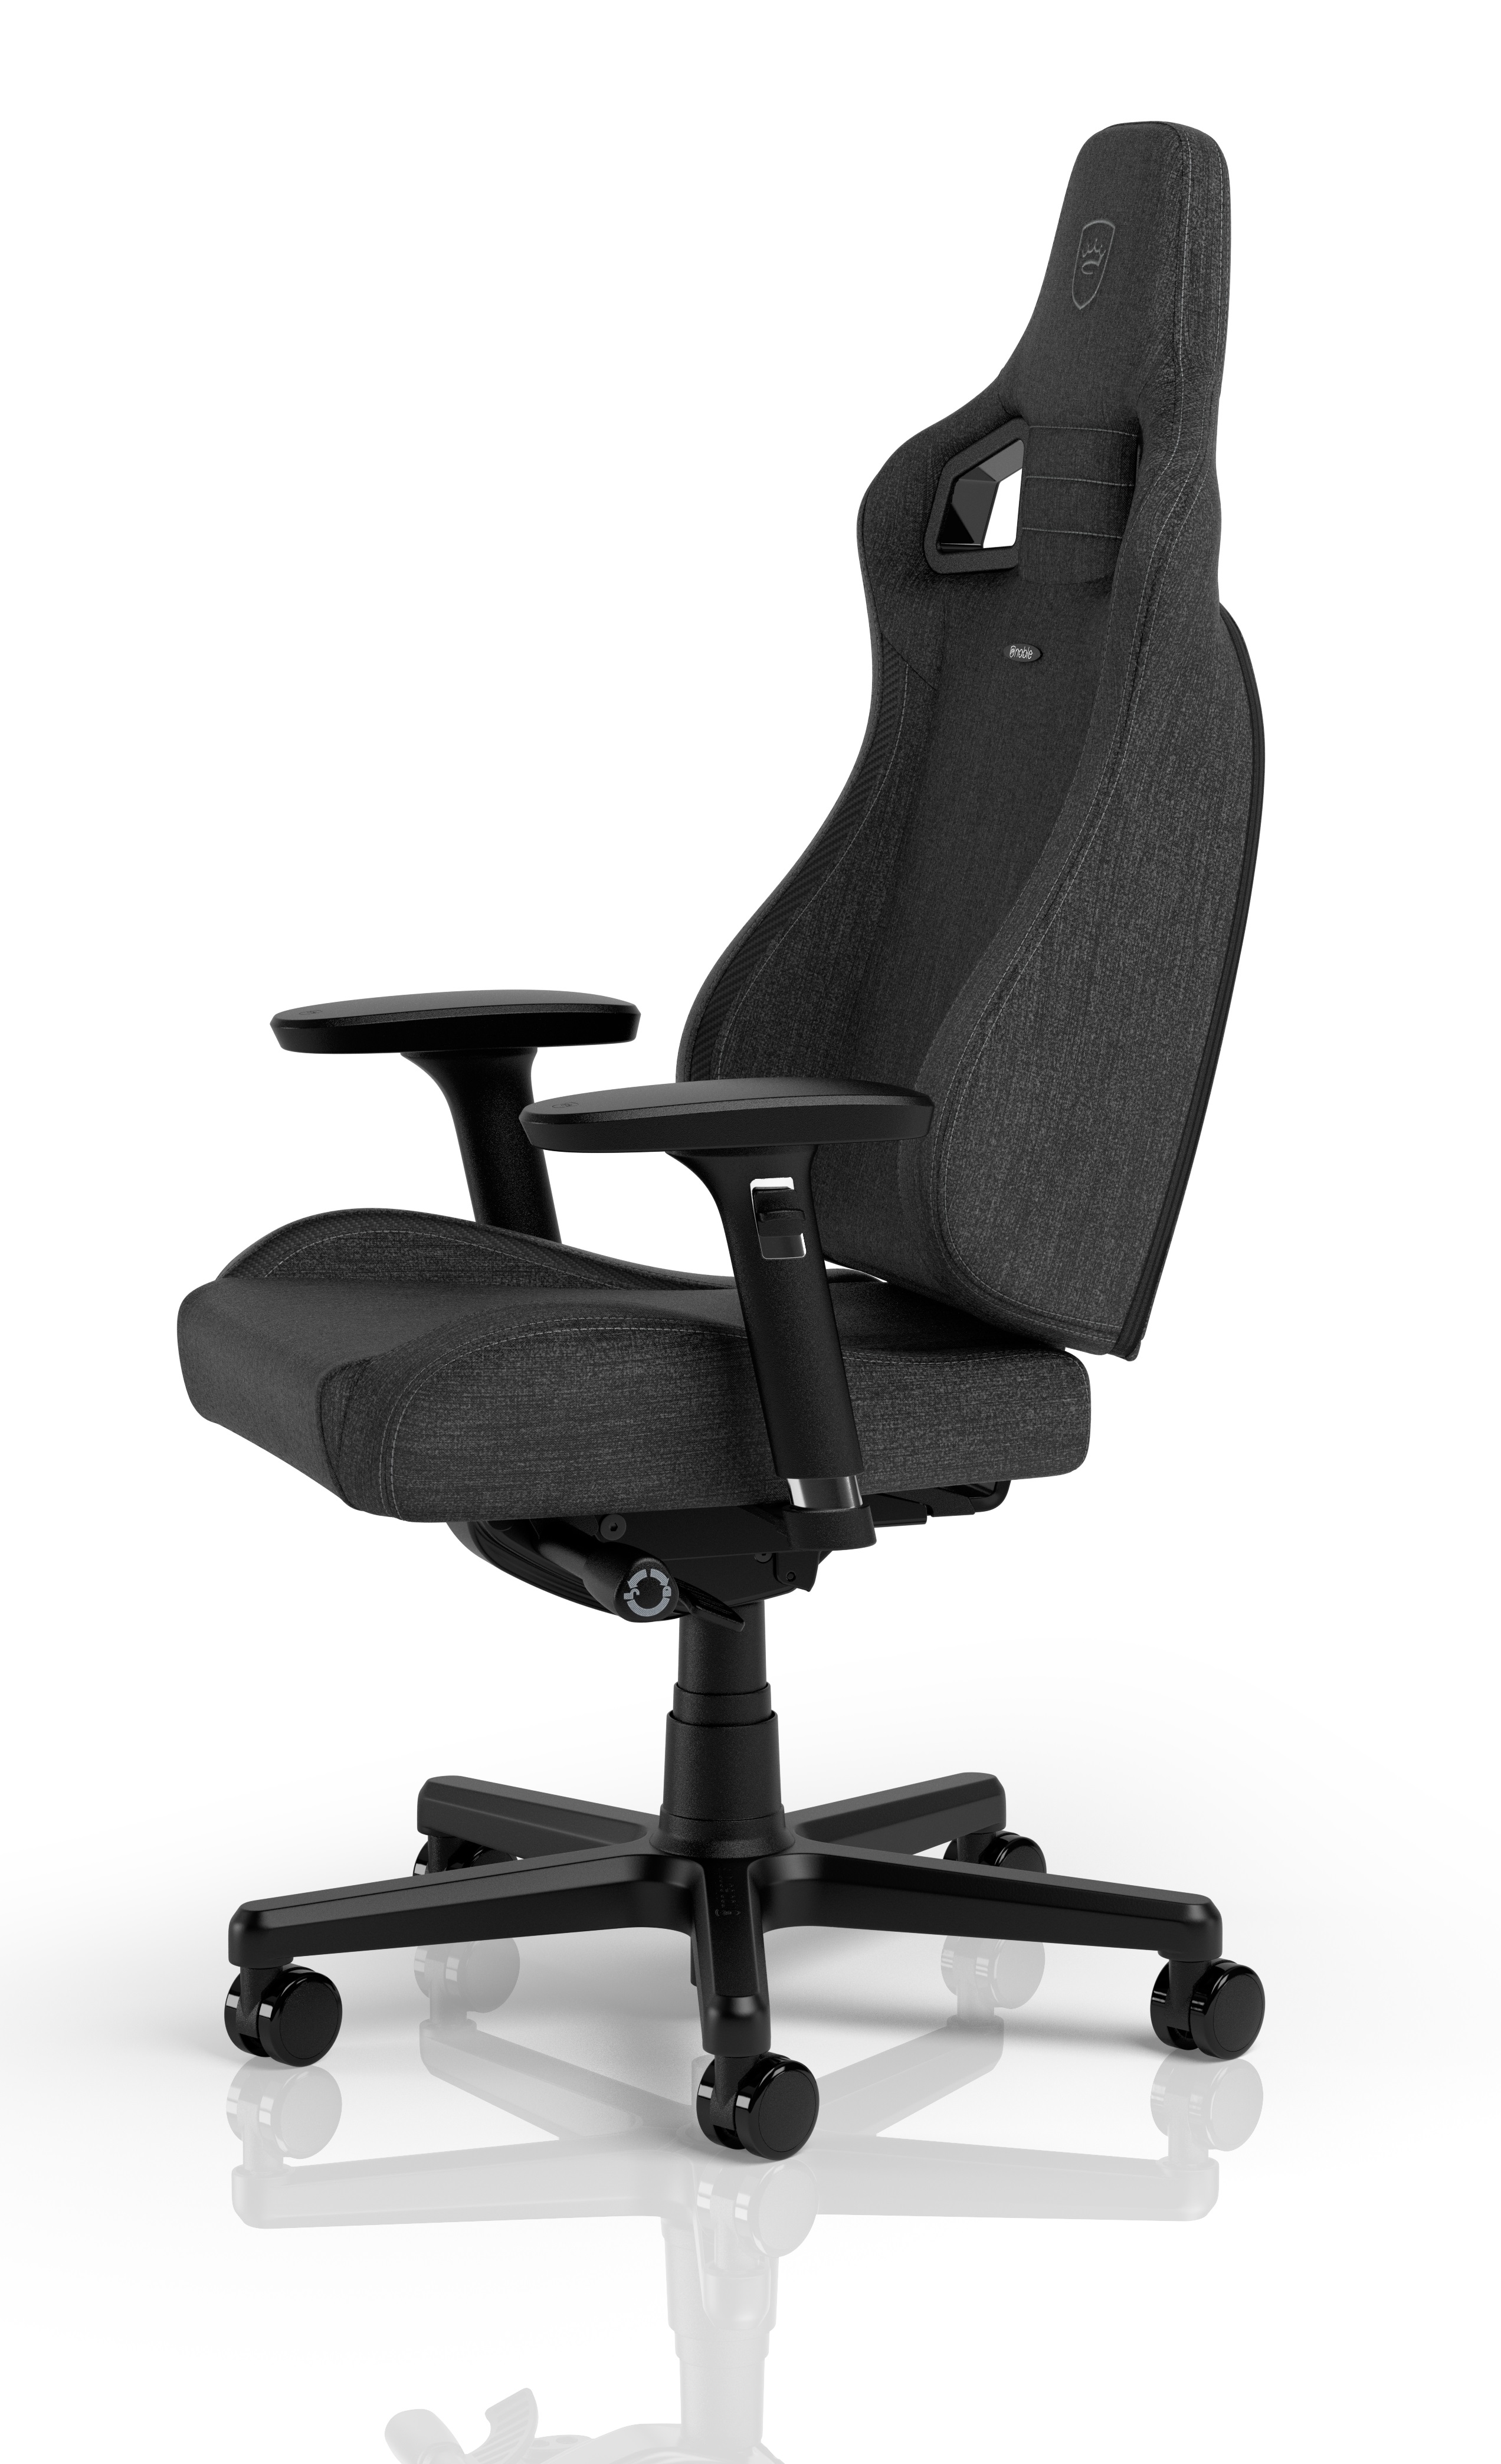 maxnomic gaming chair uk